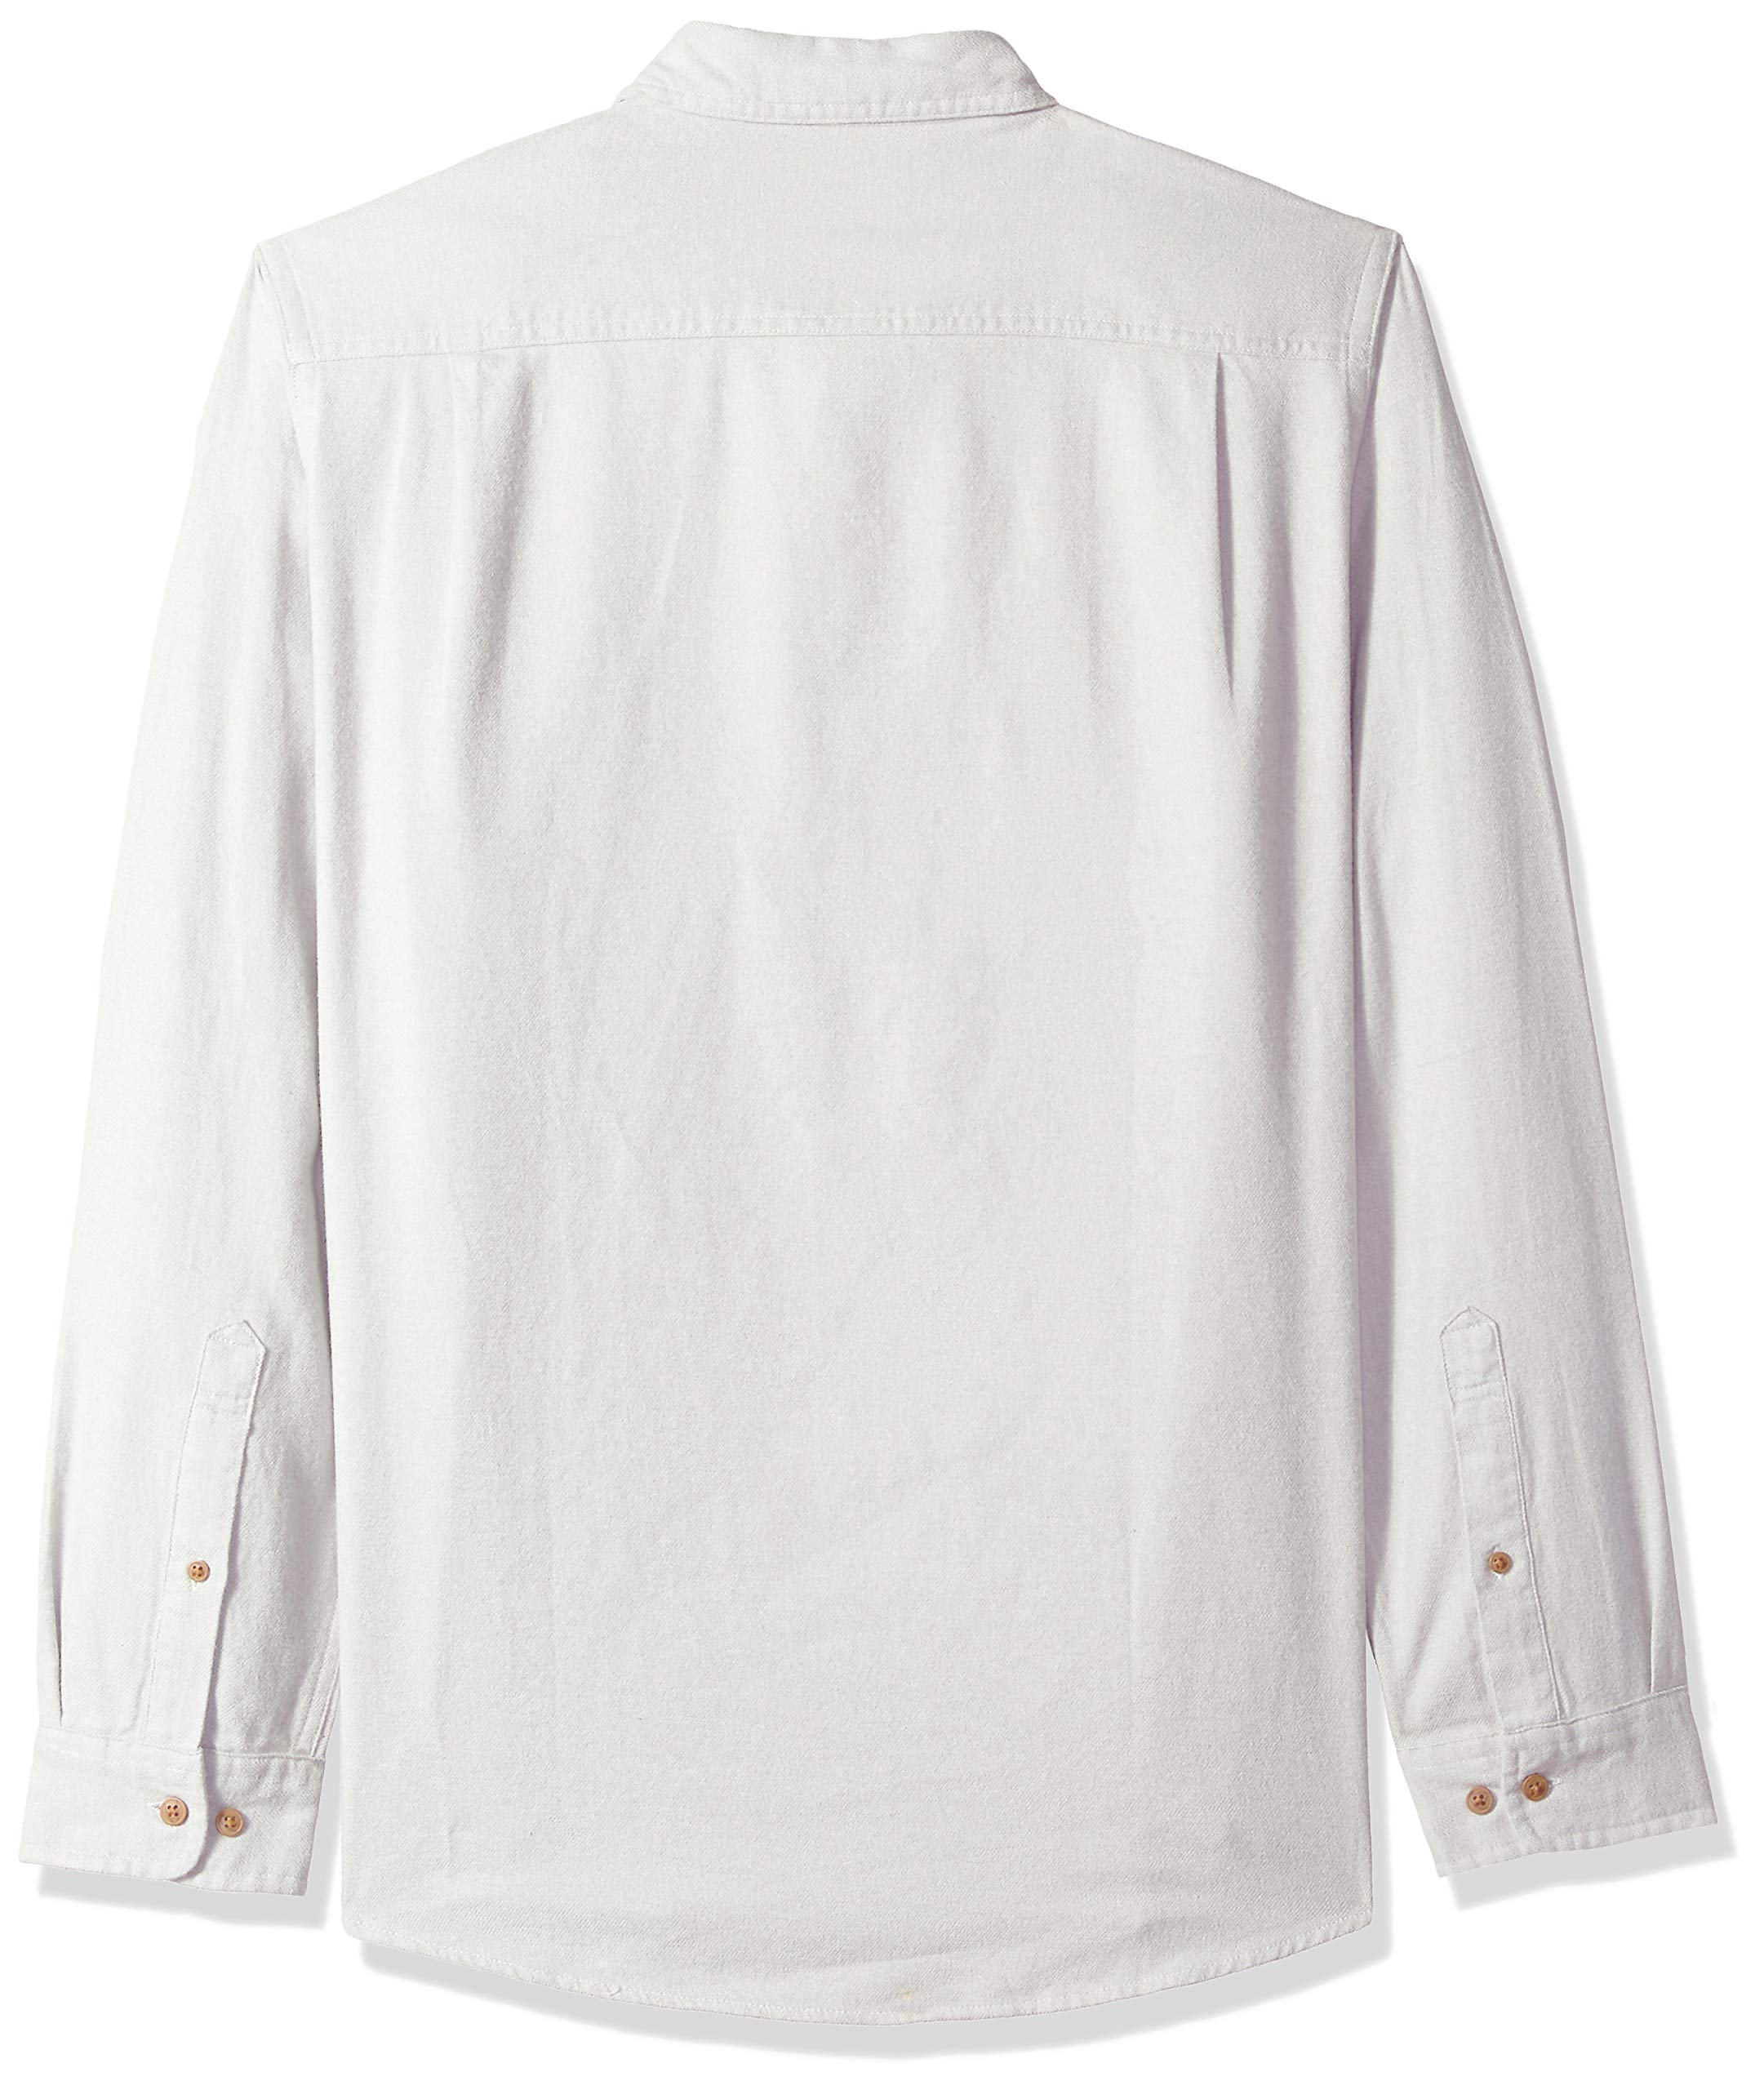 Amazon Essentials Men's Slim-Fit Long-Sleeve Two-Pocket Flannel Shirt